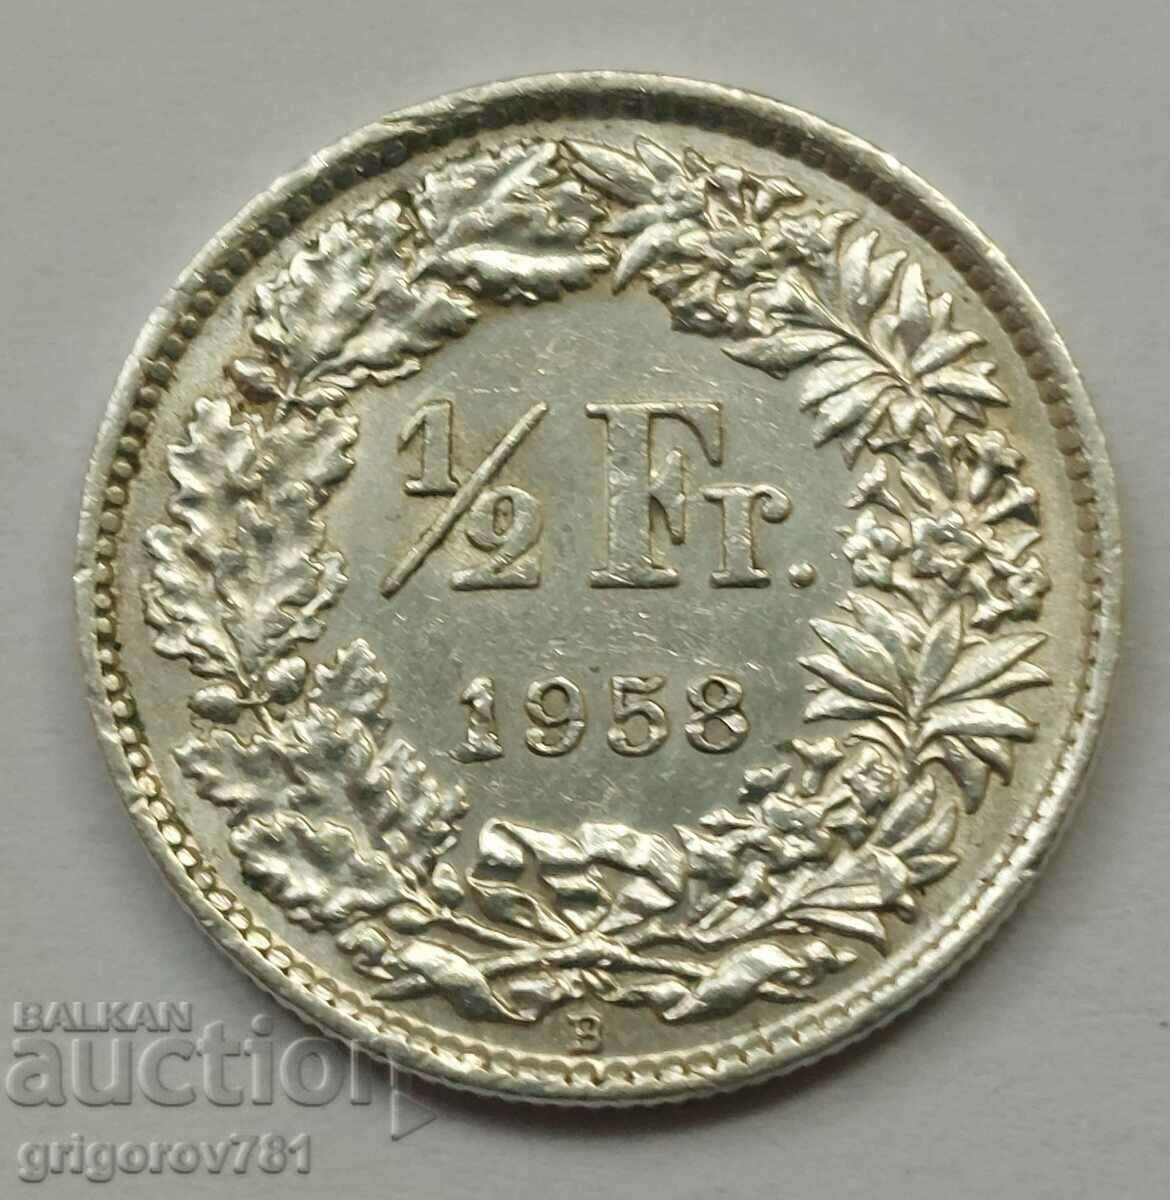 1/2 Franc Silver Switzerland 1958 B - Silver Coin #133